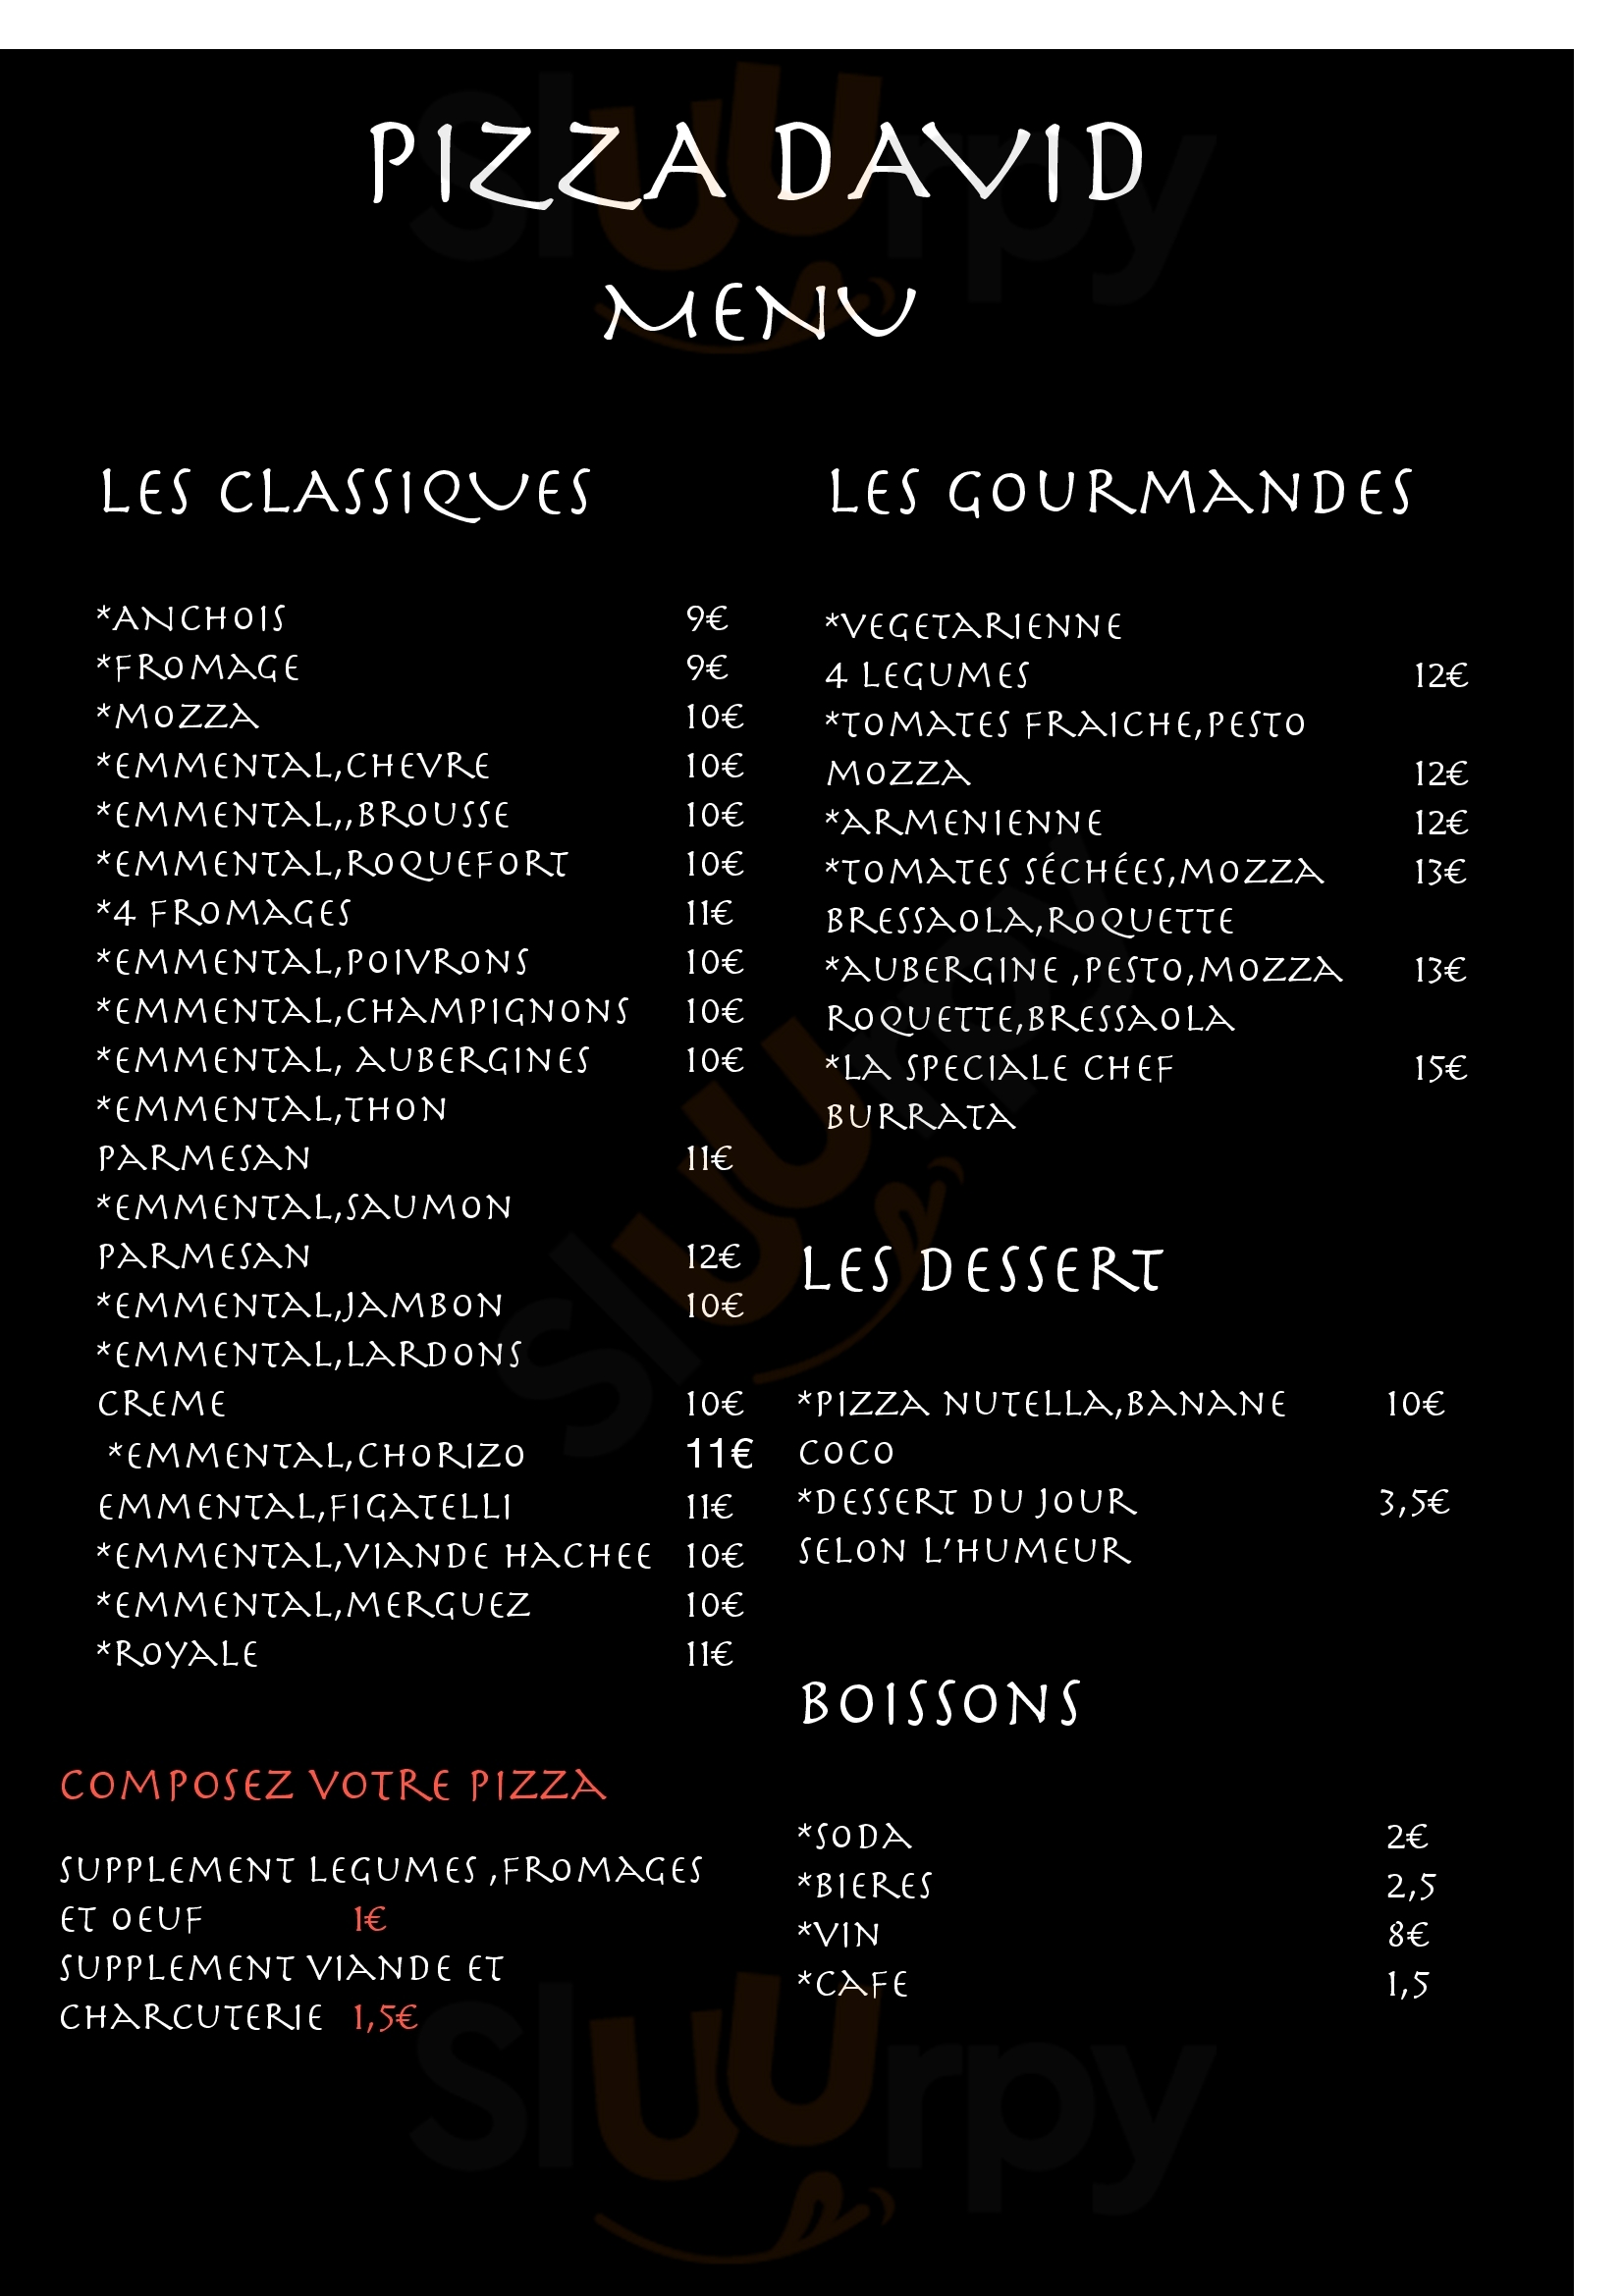 Pizza David Marseille Menu - 1